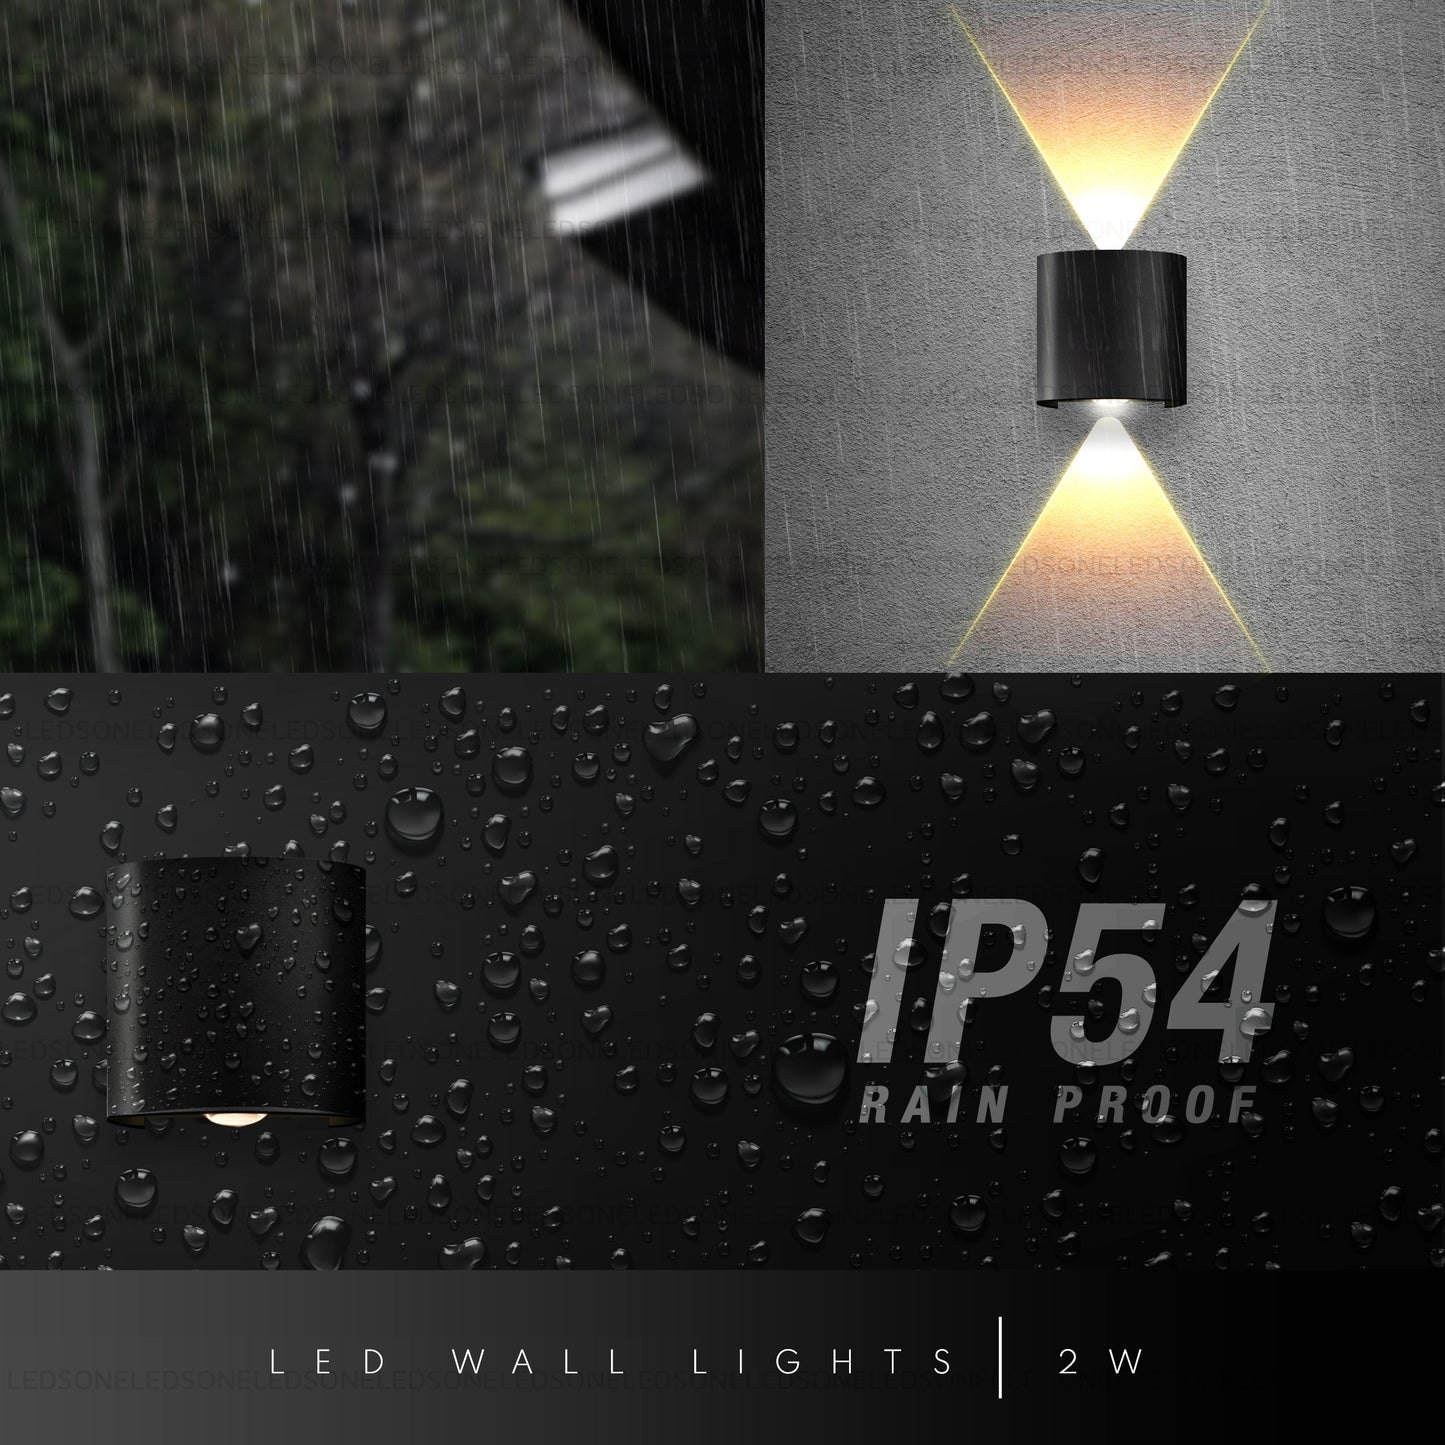 Up-Down Waterproof outdoor Wall Light.JPG